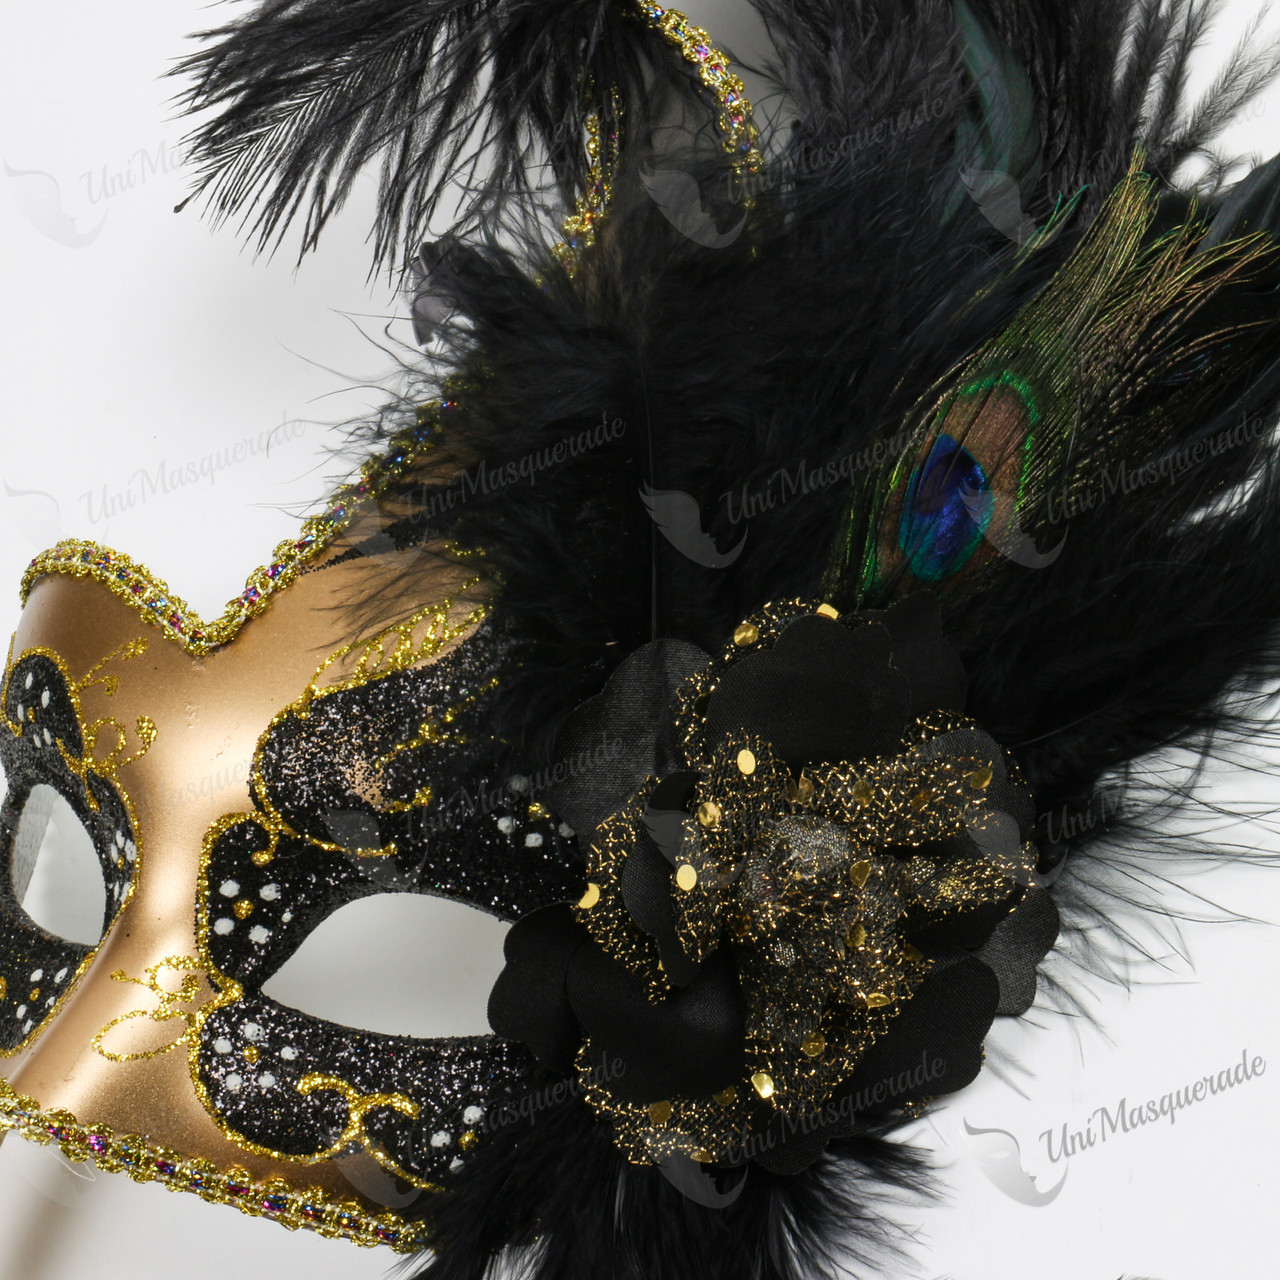 Black Feather Masquerade Masks, Masks Women, Large Feathers, Great